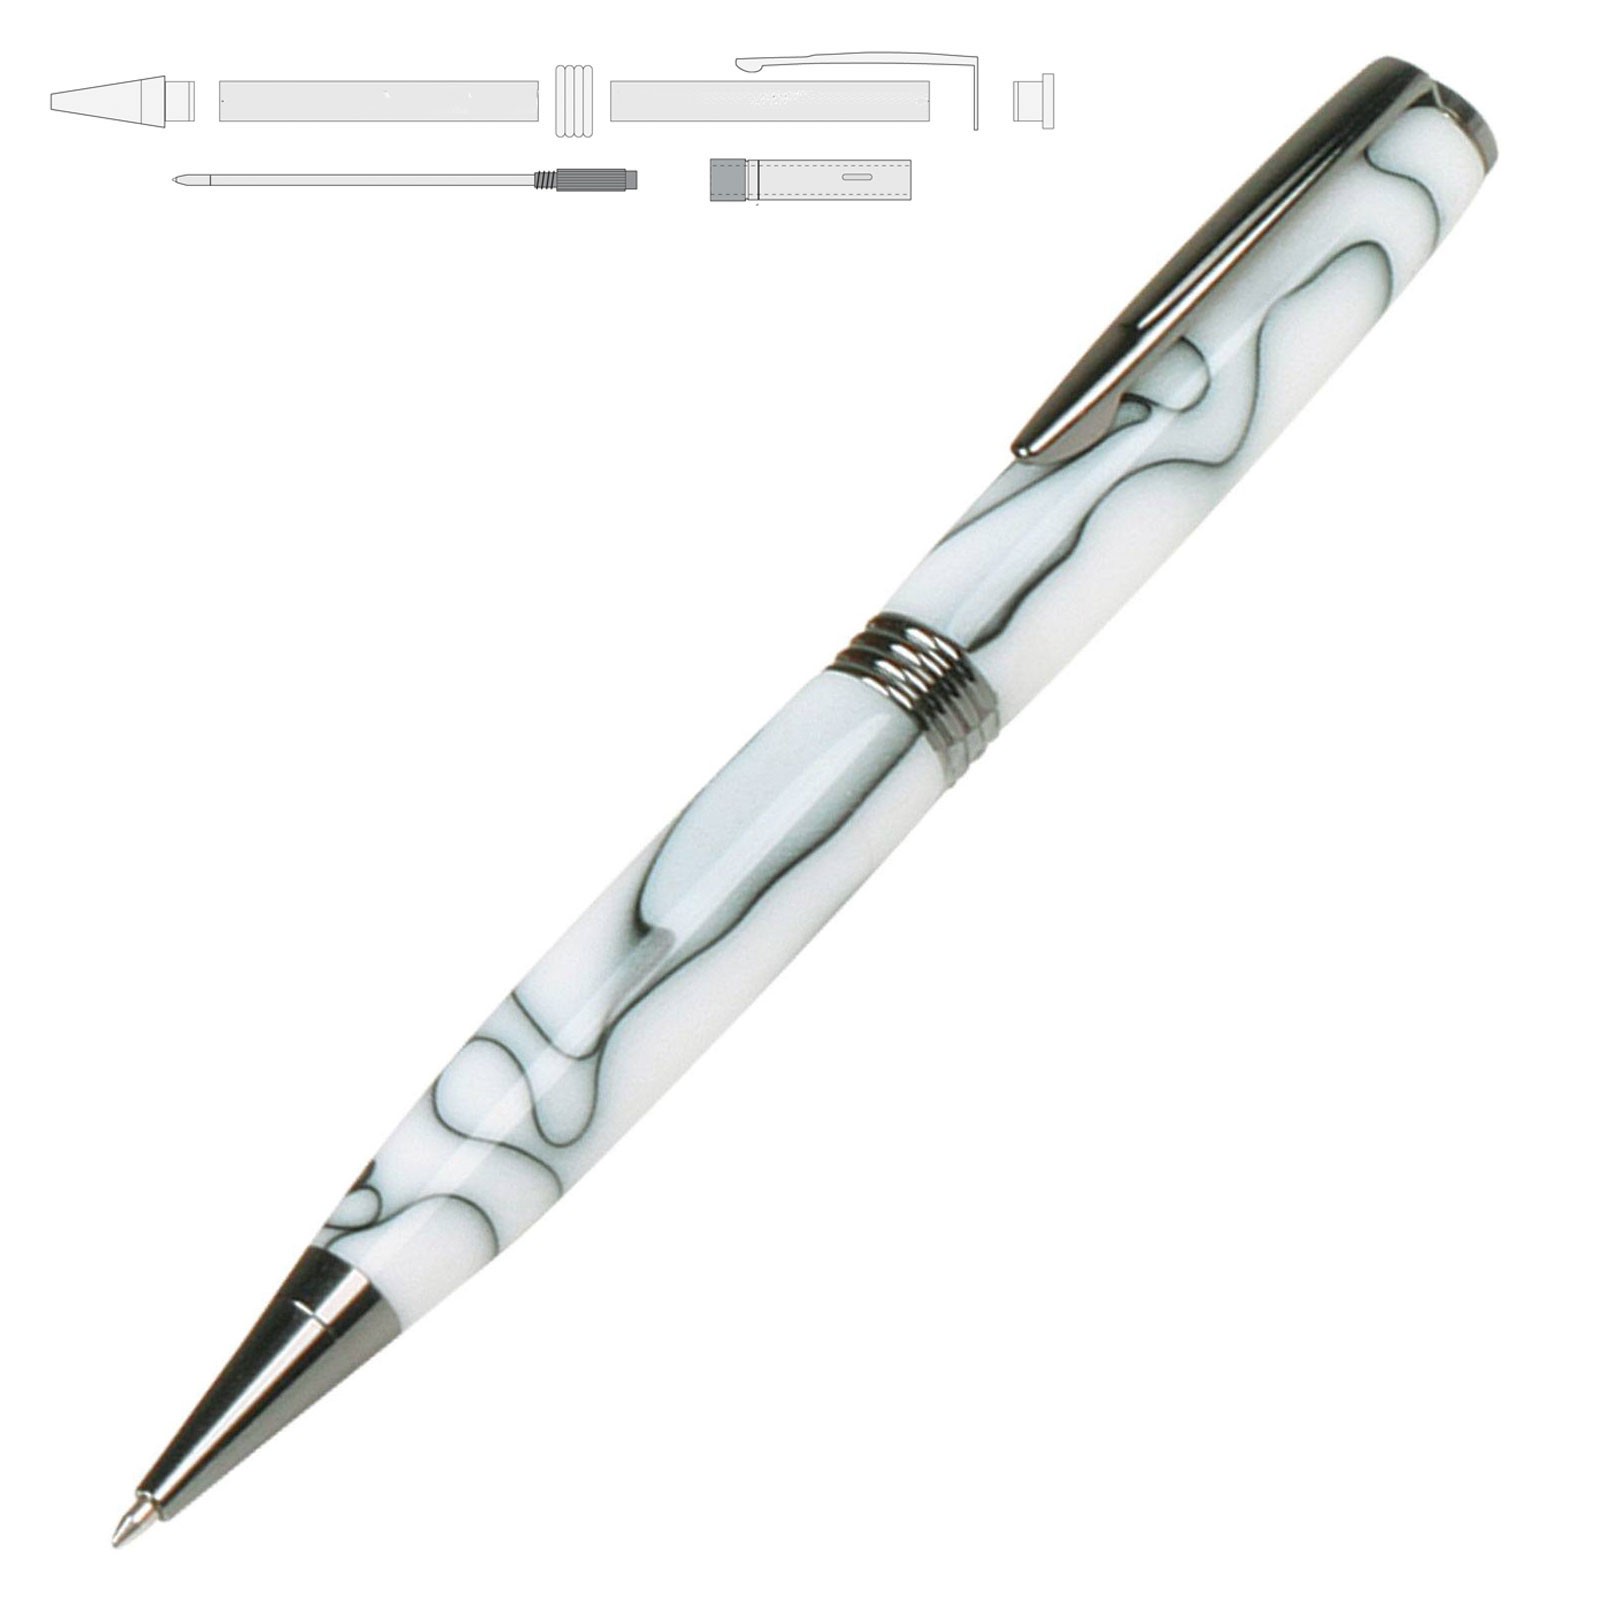 Slimline Pen Kit for Wood Turning || 10 Pack with Multiple Finishes || 7mm  Twist Pen Kit